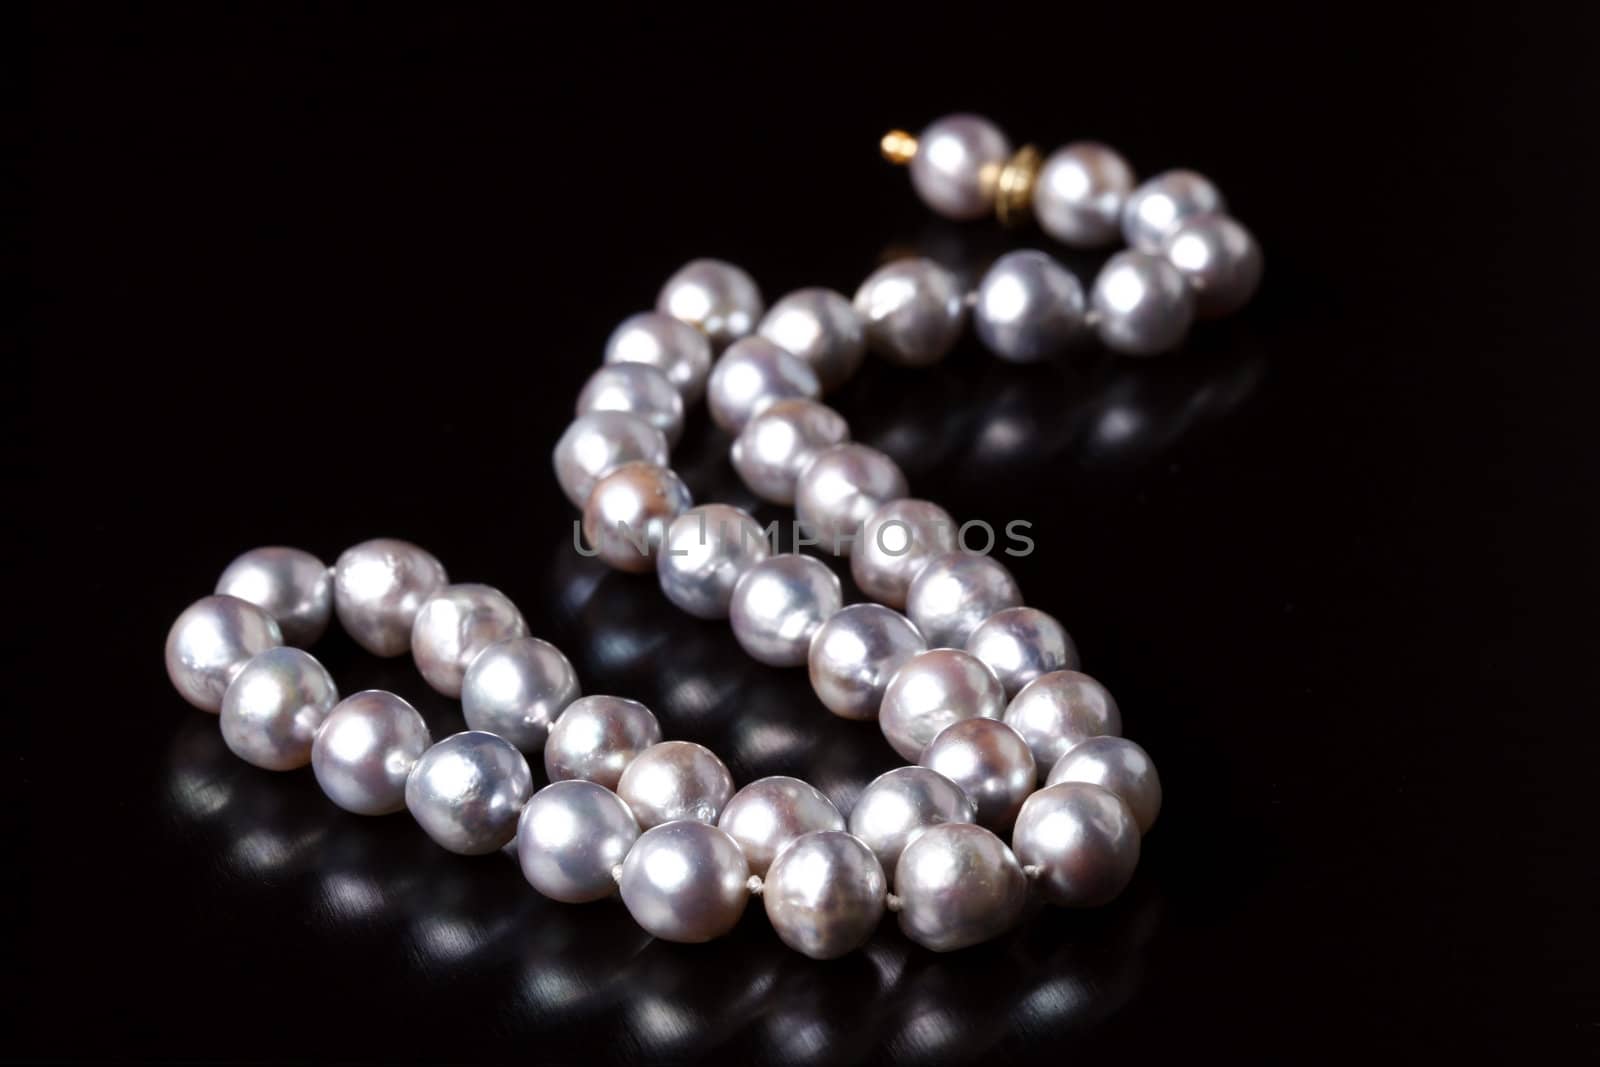 grey pearls on black background